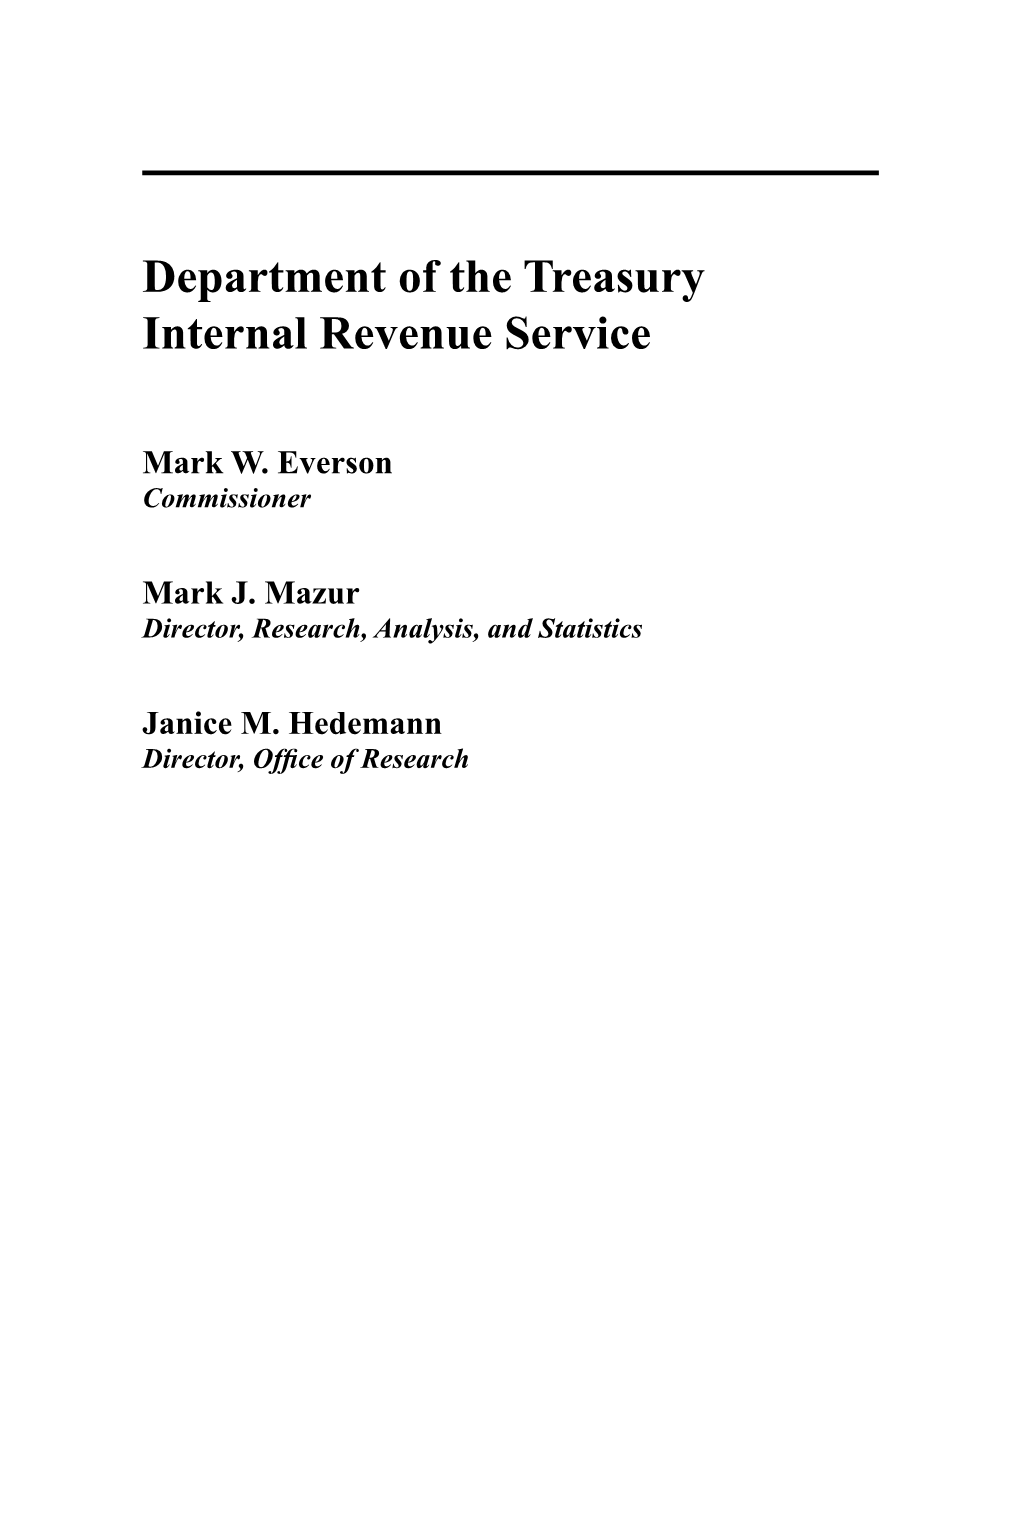 Department of the Treasury Internal Revenue Service